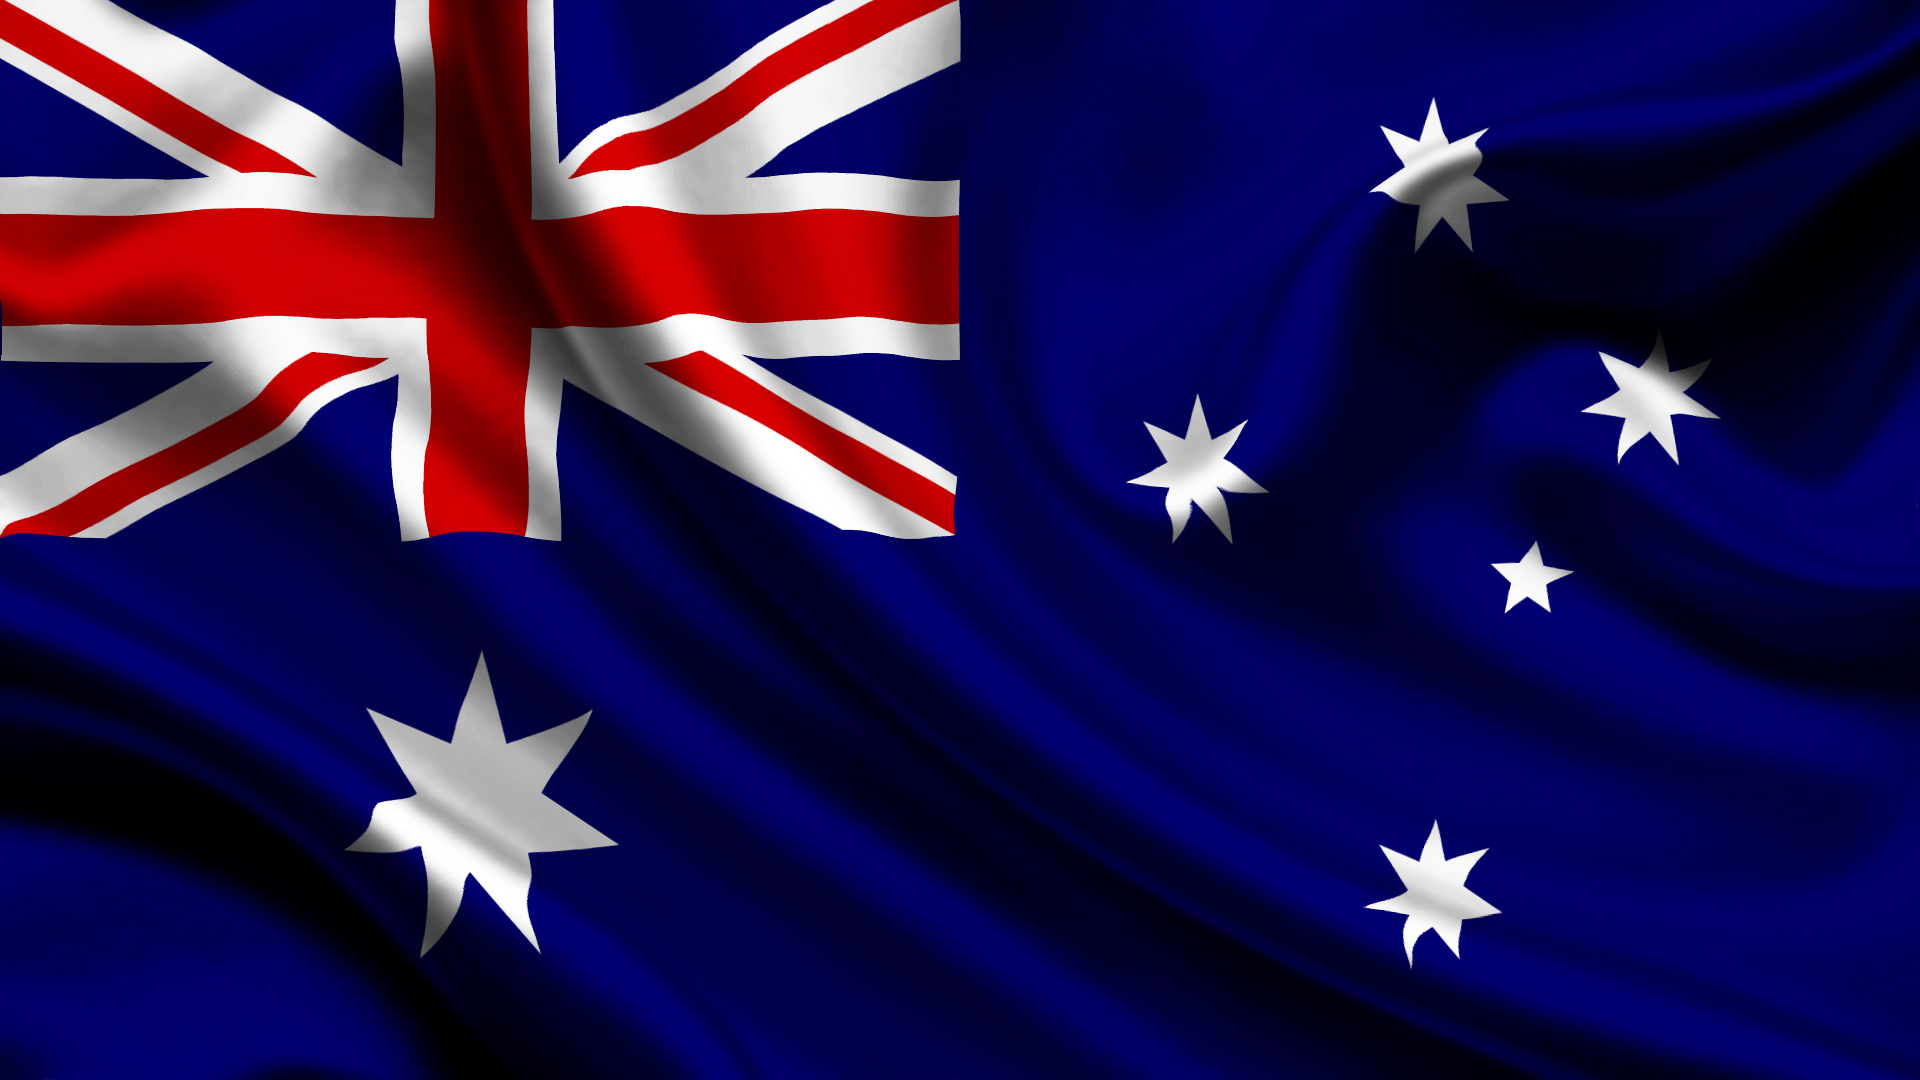 Australian Flag - Australia Day Wallpaper (39222296) - Fanpop